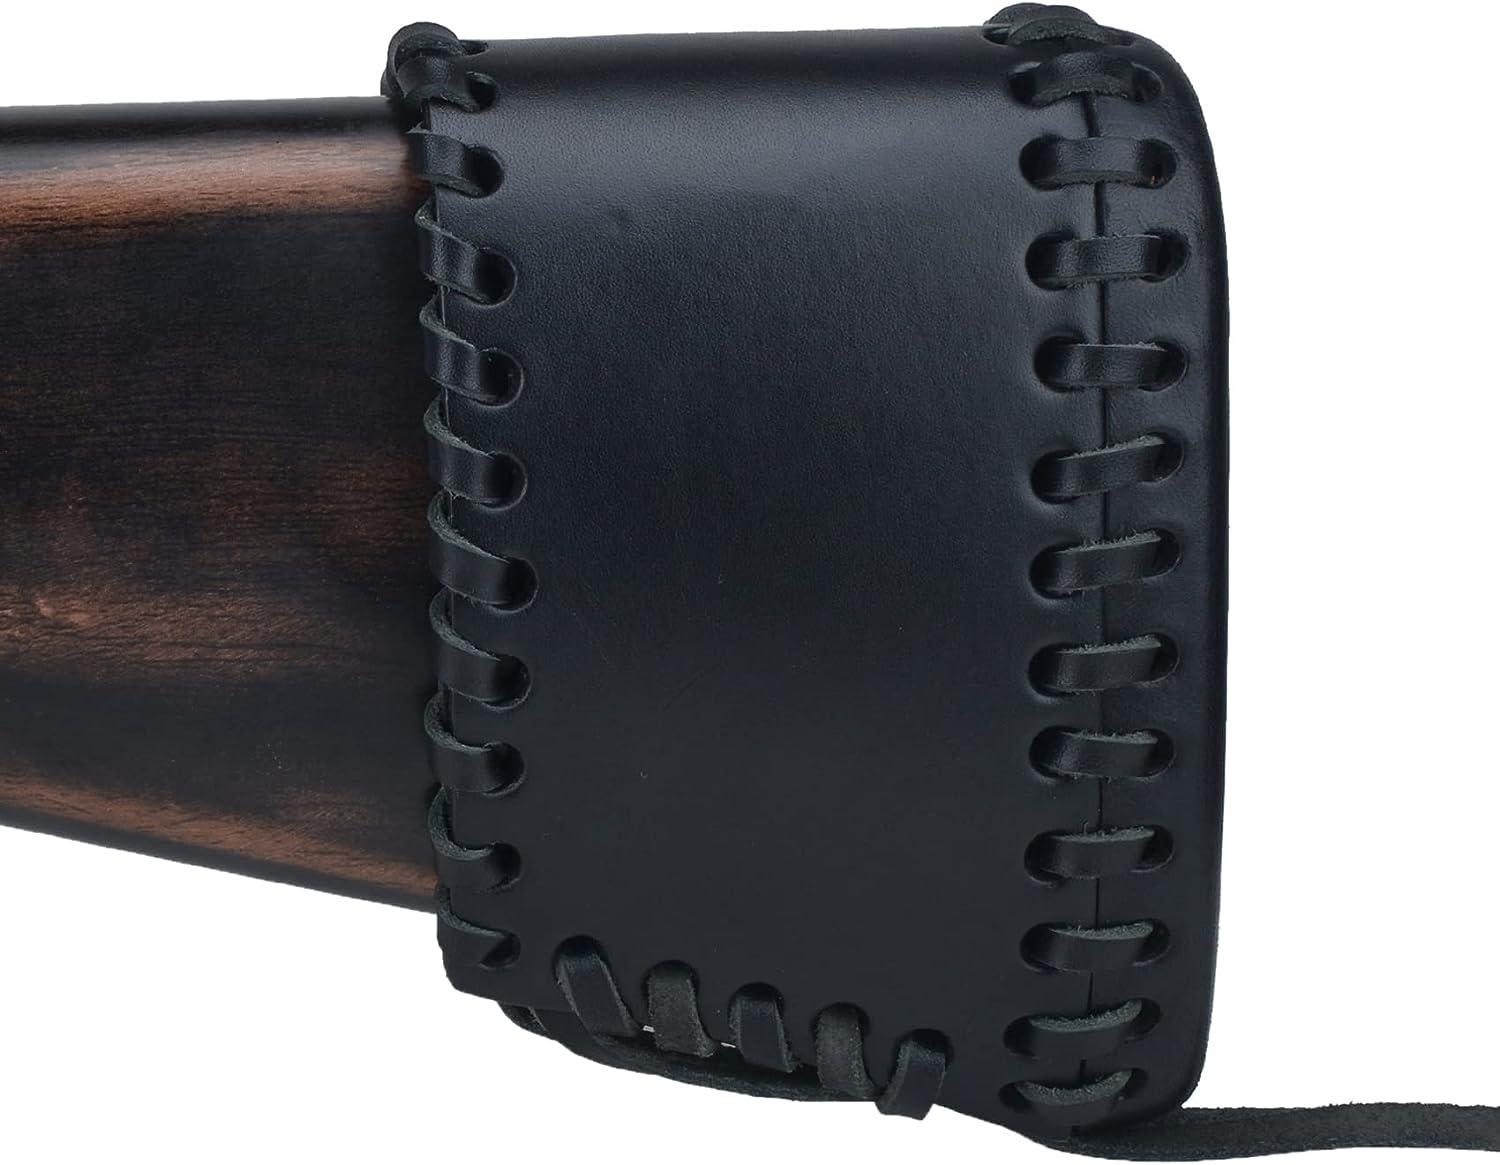 OXPANG Leather Rifle Gun Buttstock Extension, Slip on Recoil pad, Shotguns  Gun Butt Protector Black(Veg tanned)